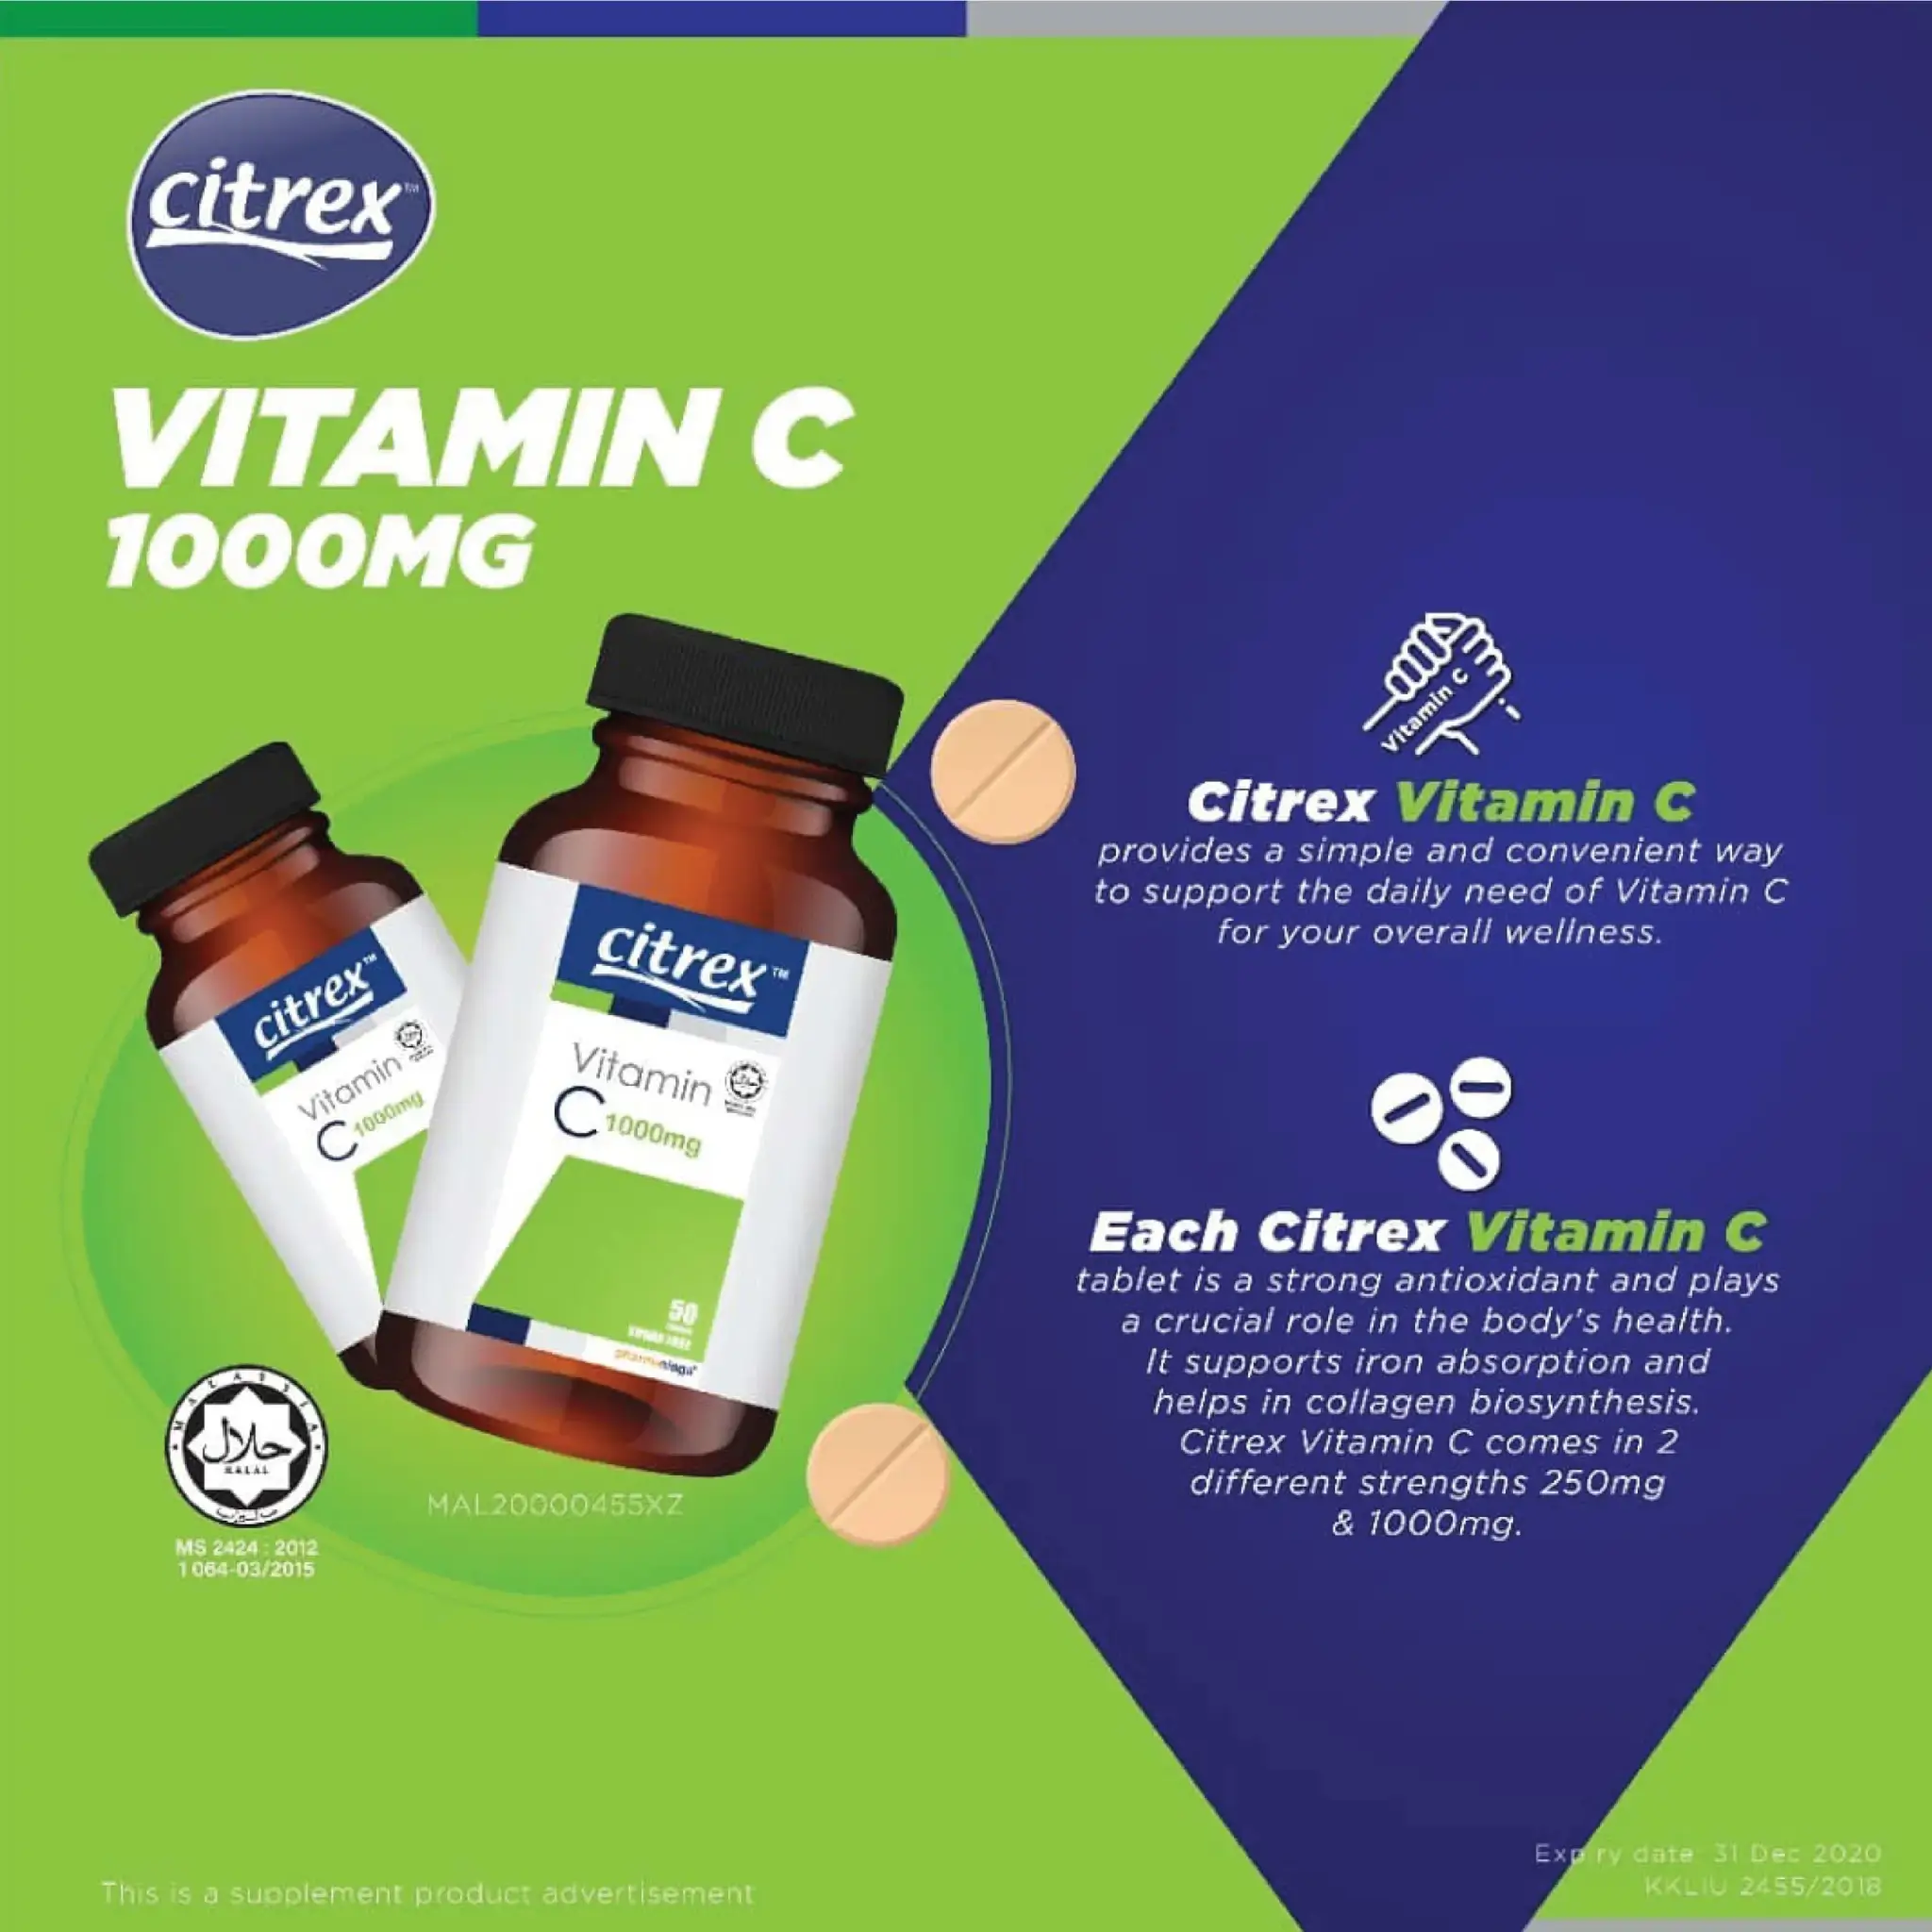 Citrex vitamin C 1000mg harga